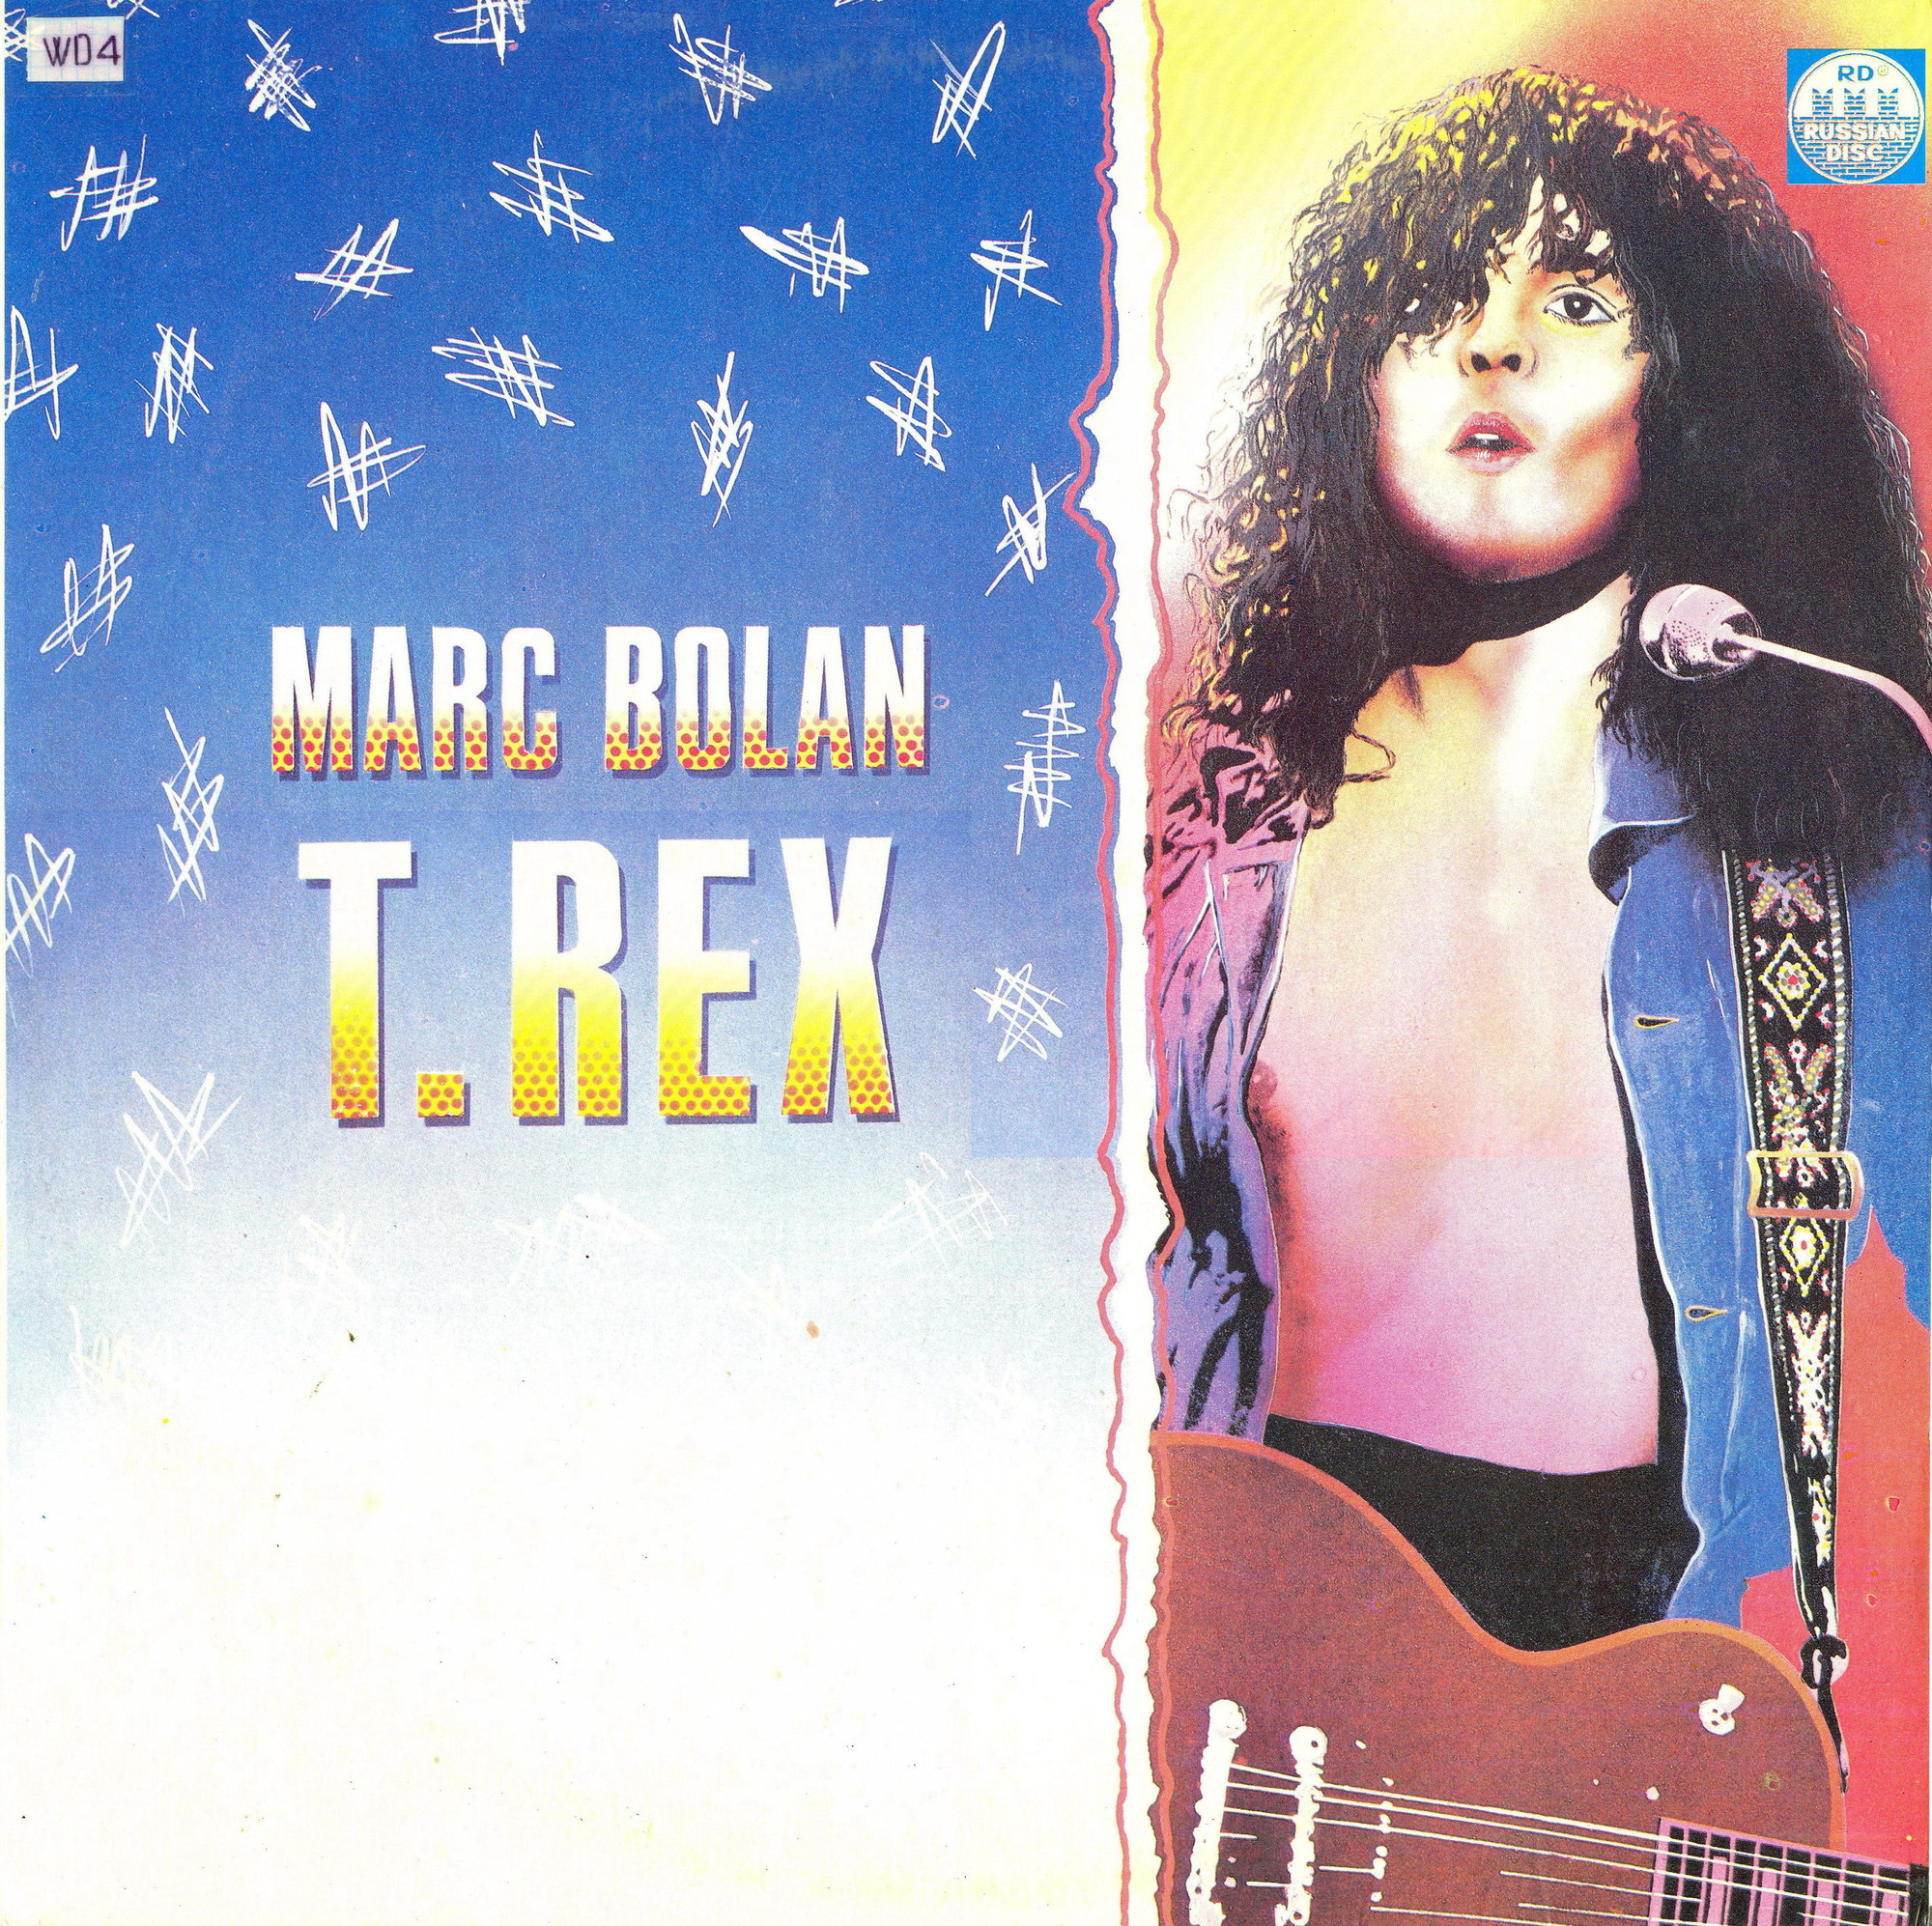 Marc Bolan / T. Rex